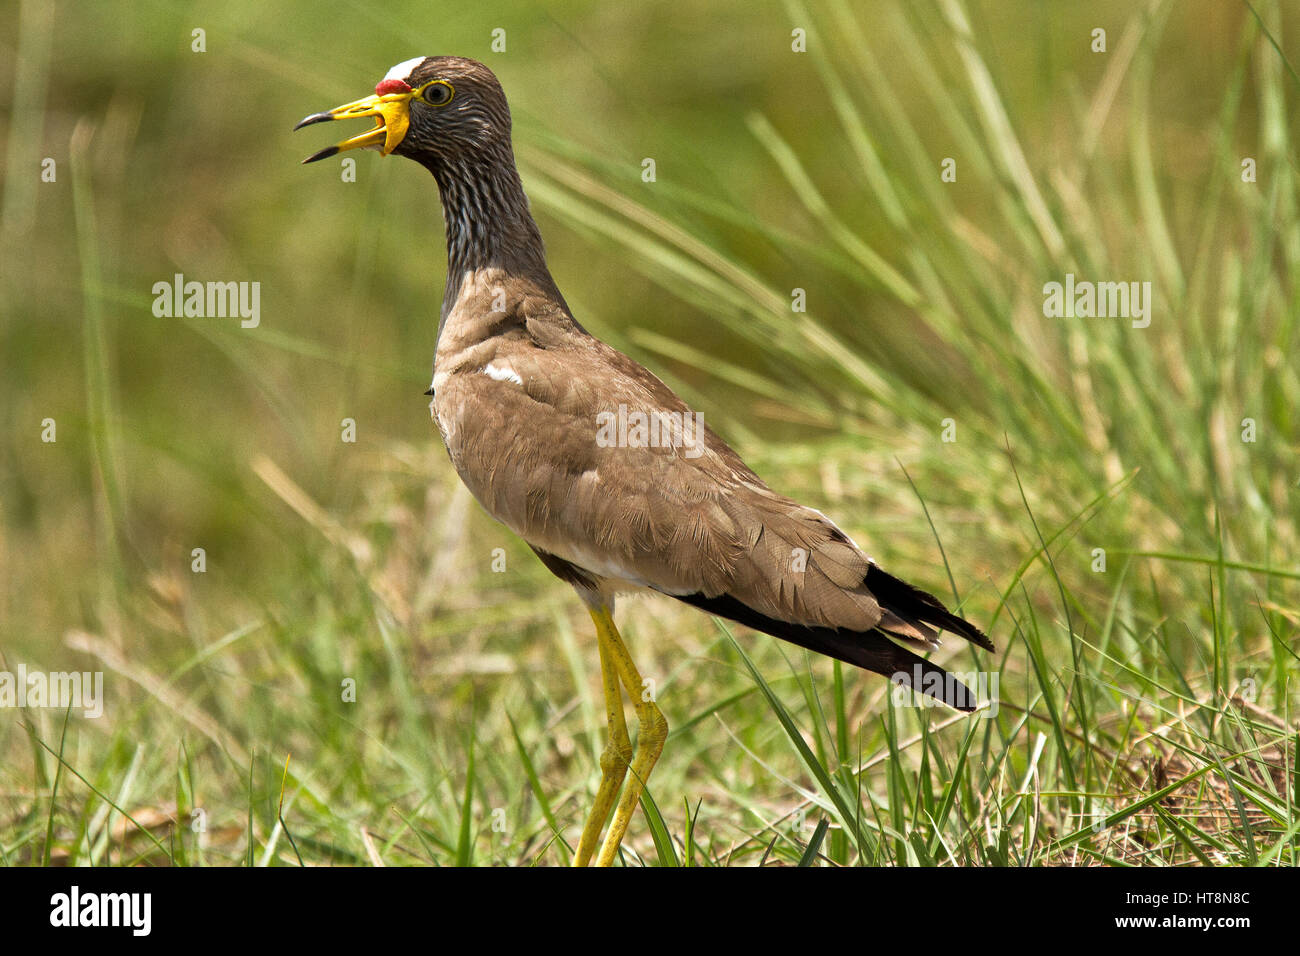 Wattled lapwing showing wattles around beak Stock Photo